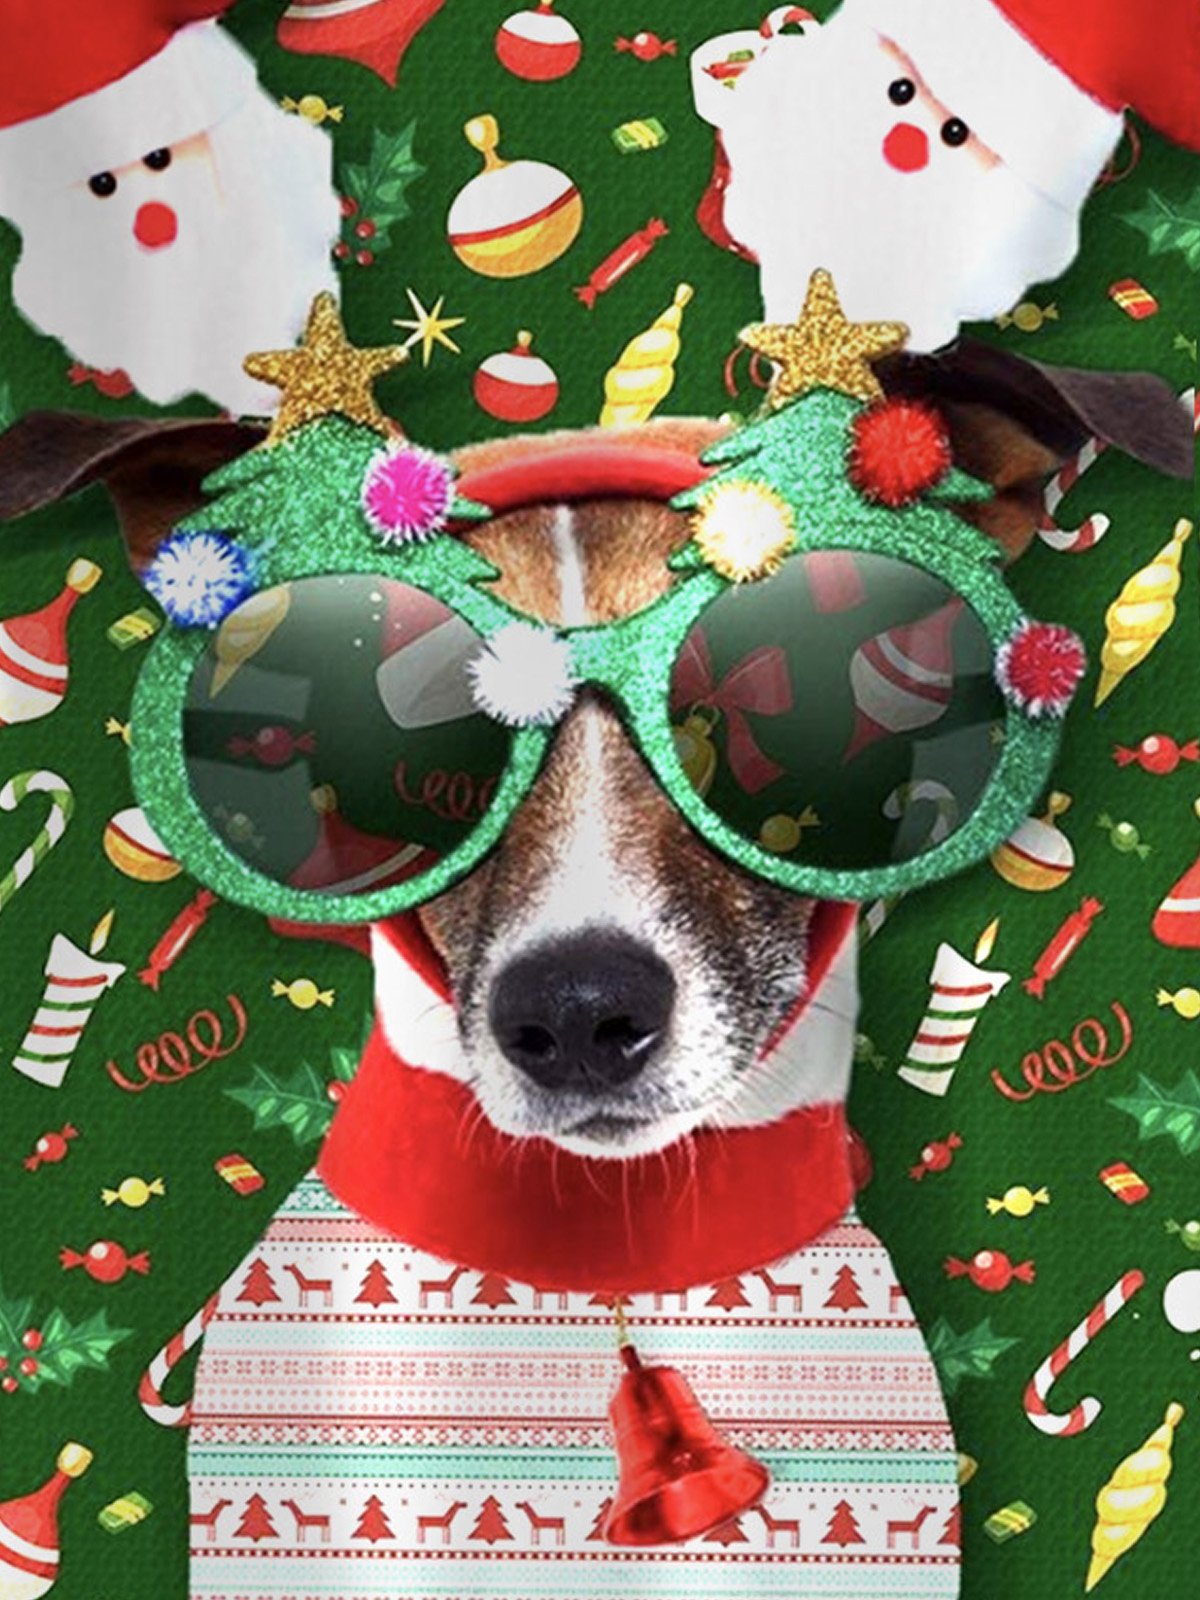 JoyMitty Men's Christmas Cartoon Dog Print Round Neck Long Sleeve Sweatshirt